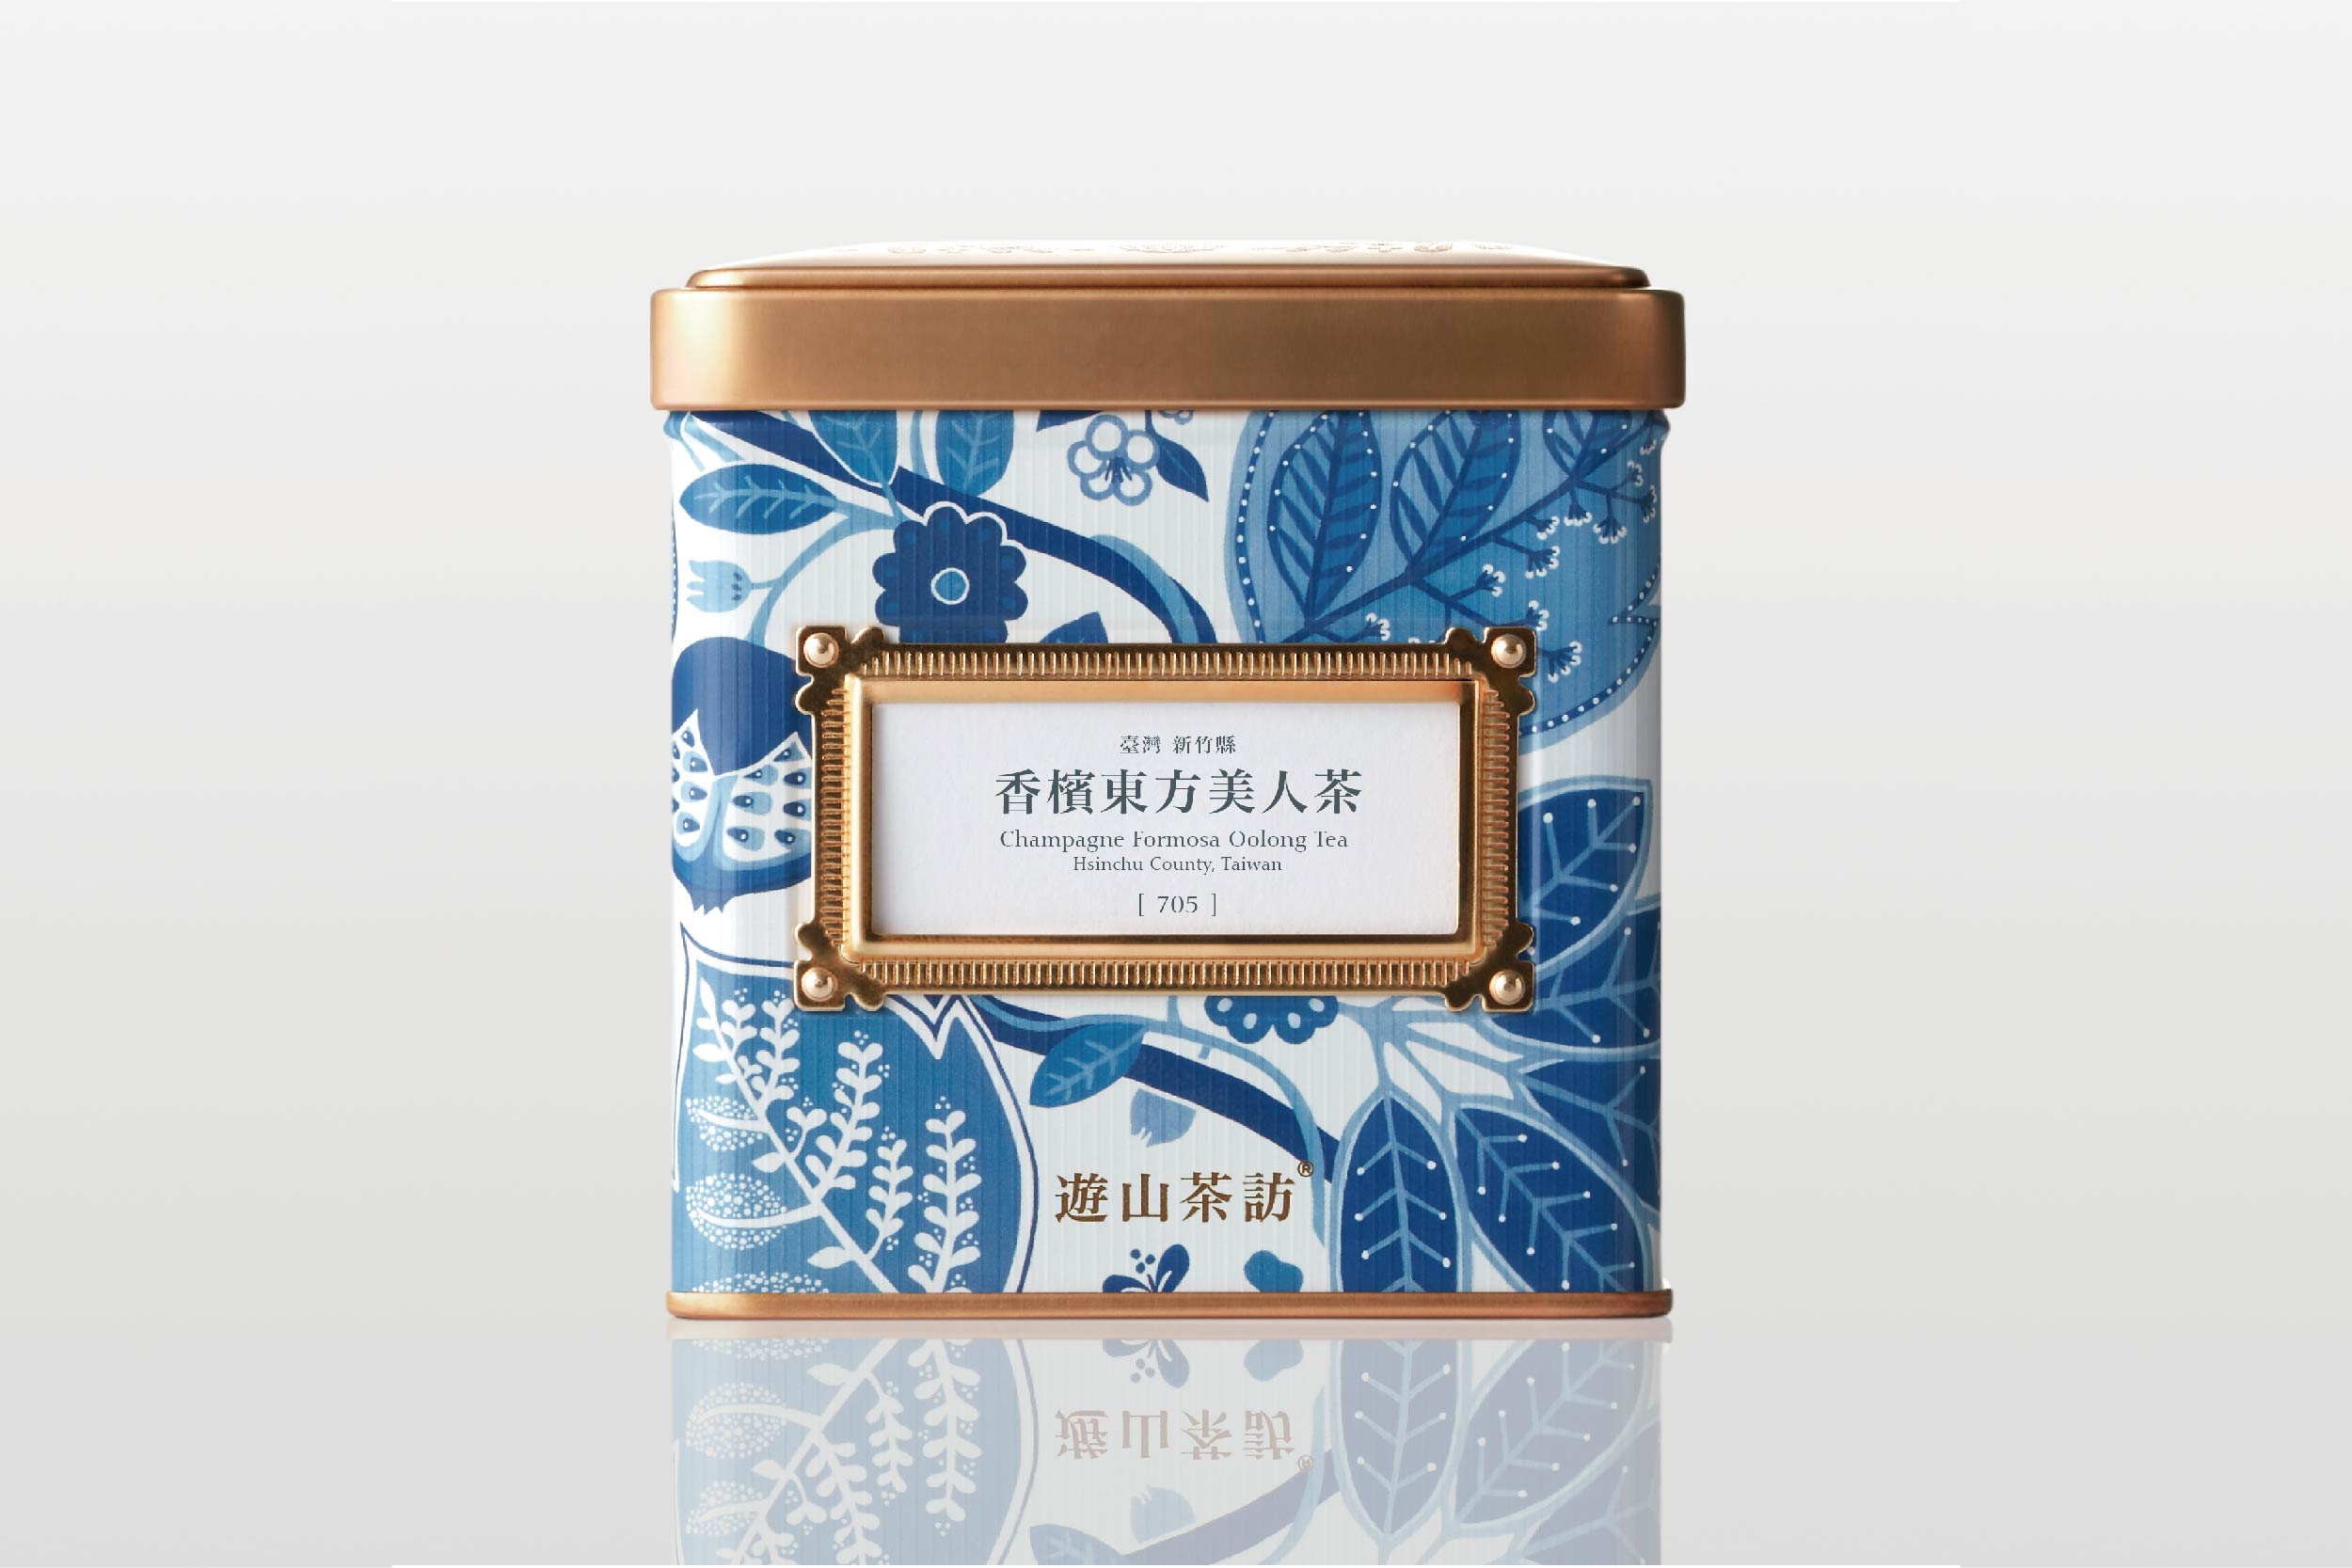 Champagne Formosa Oolong Tea